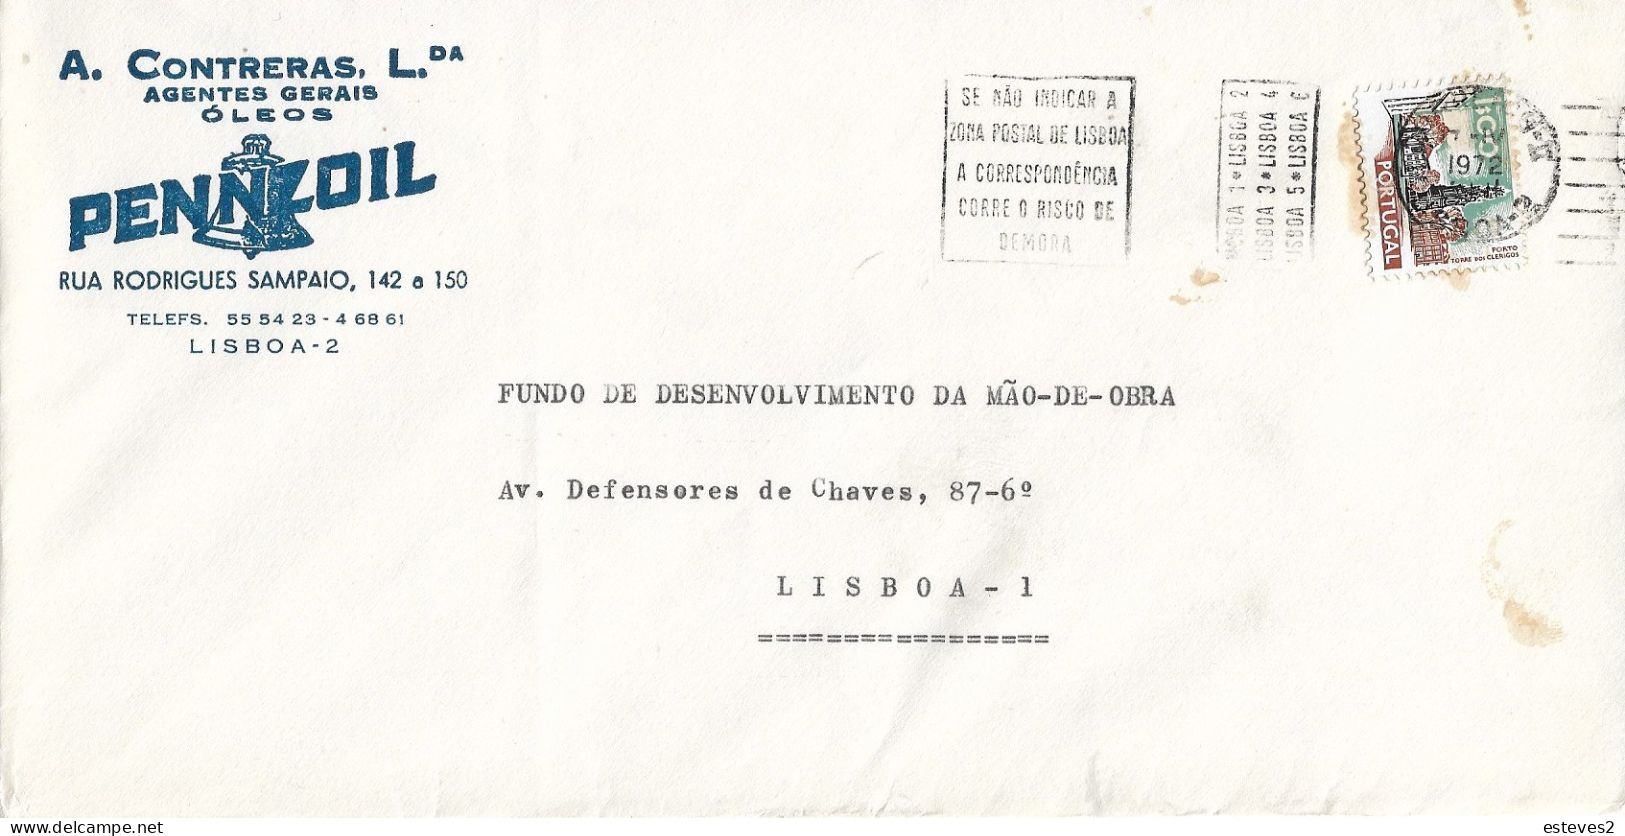 Portugal , 1972 Advertising Envelope , PENNZOIL Oils , A. Contreras General Agents - Pubblicitari